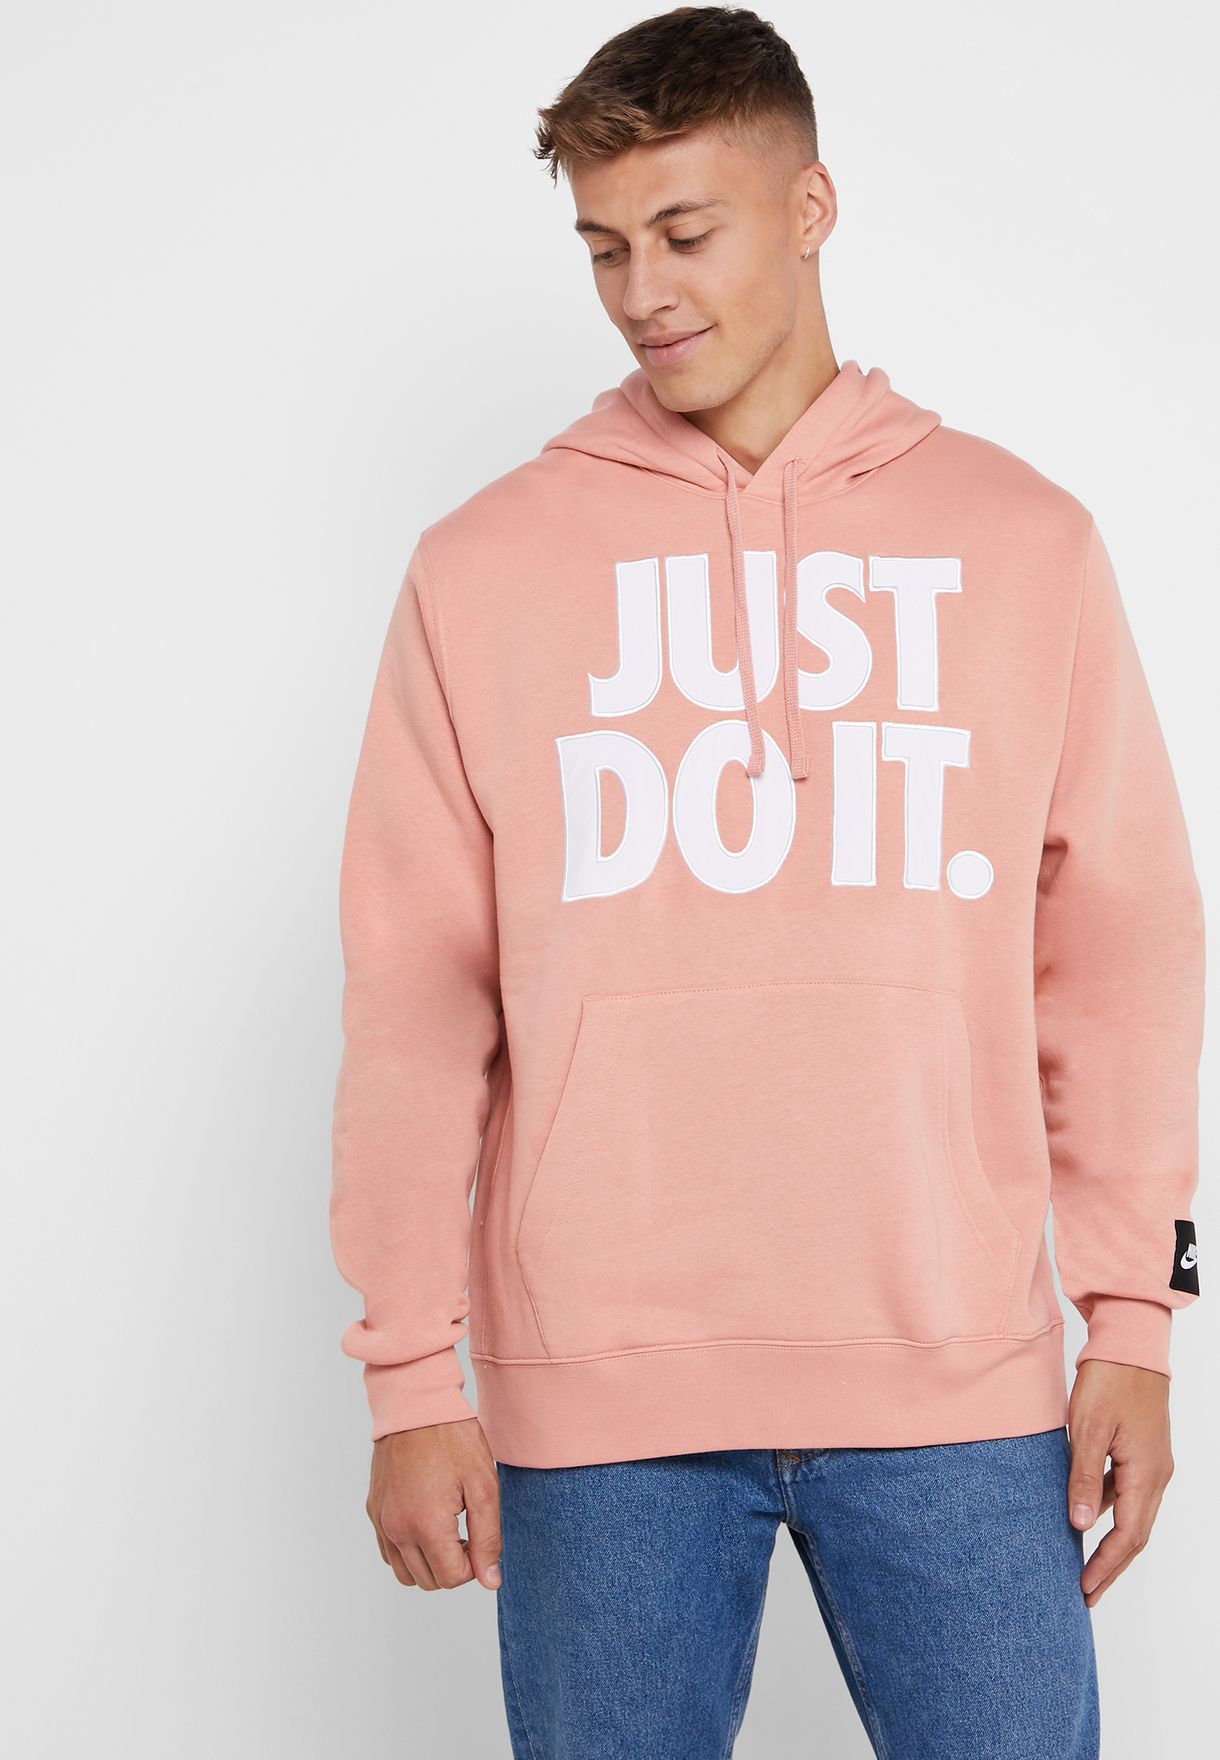 pink nike just do it hoodie